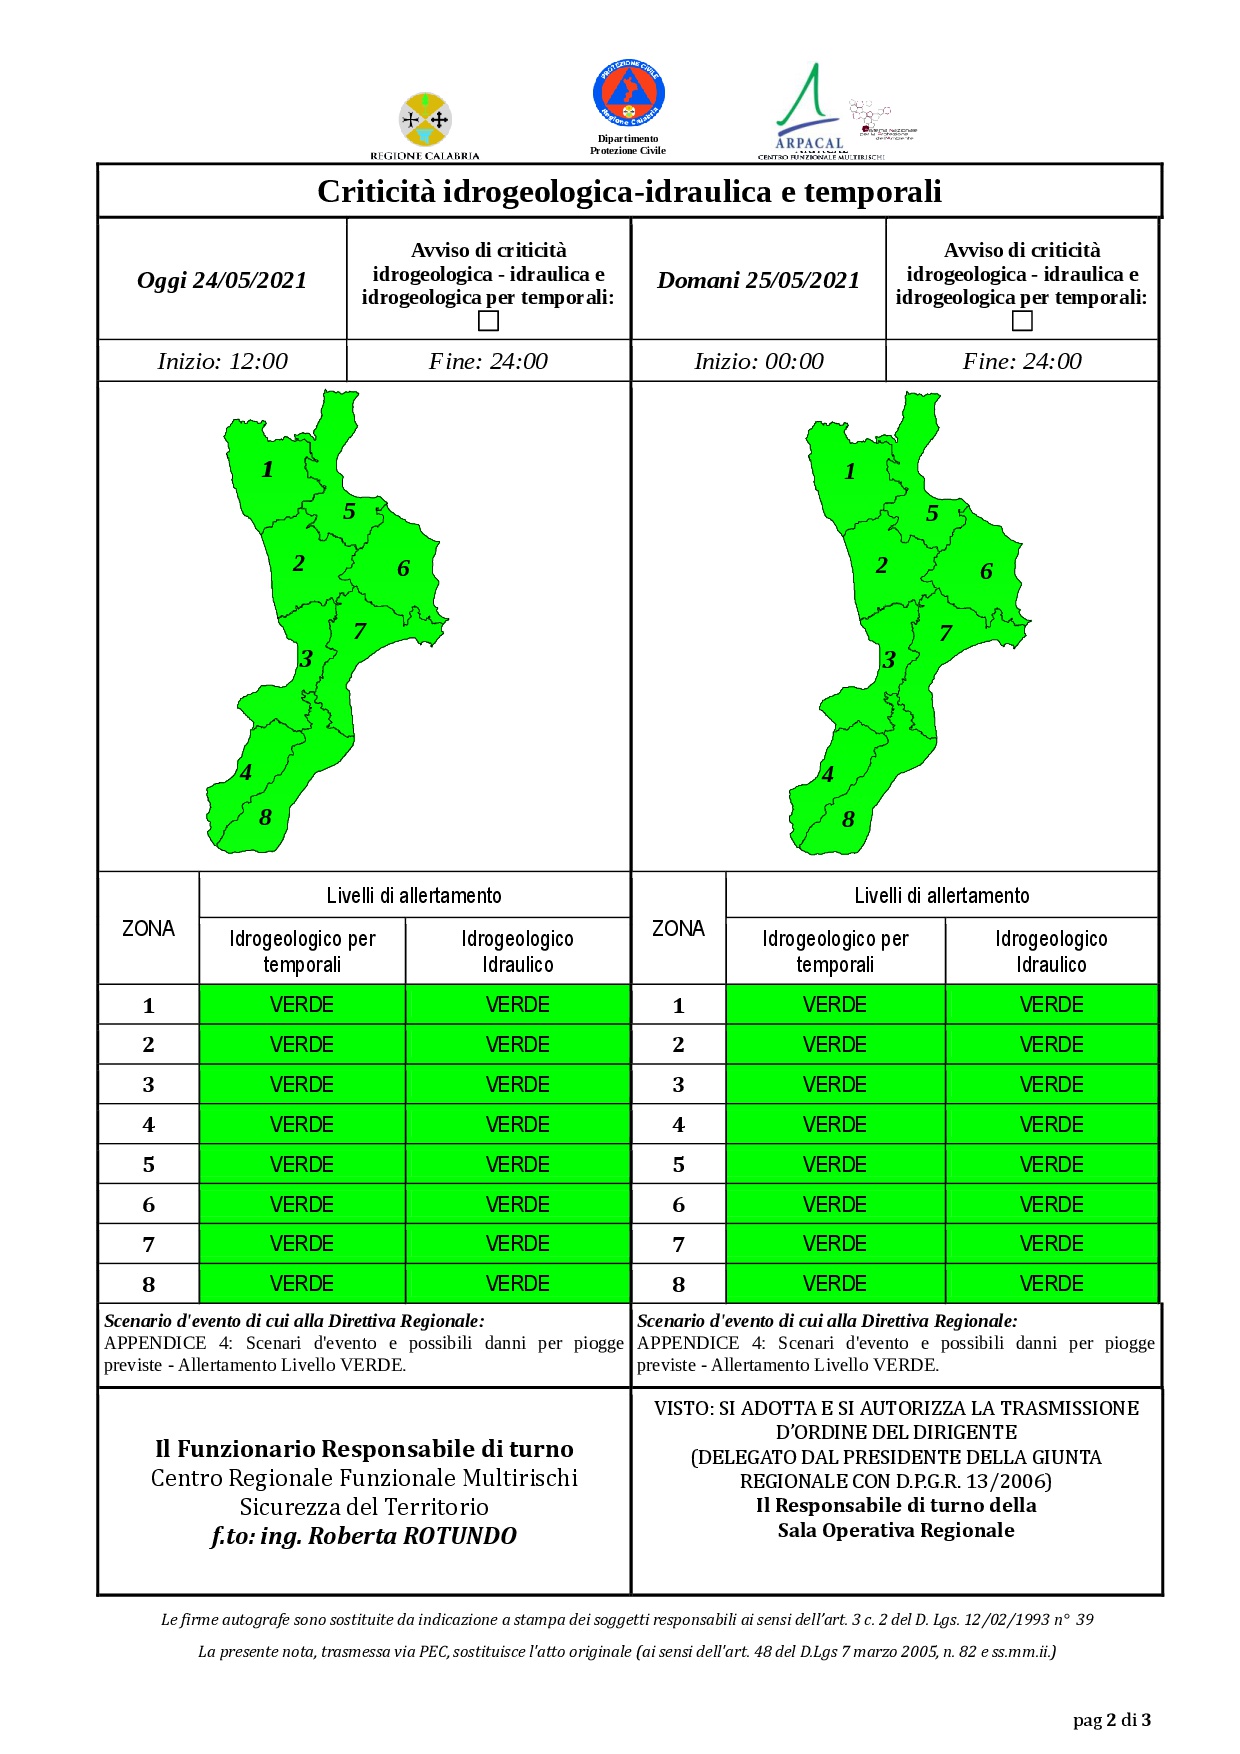 Criticità idrogeologica-idraulica e temporali in Calabria 24-05-2021